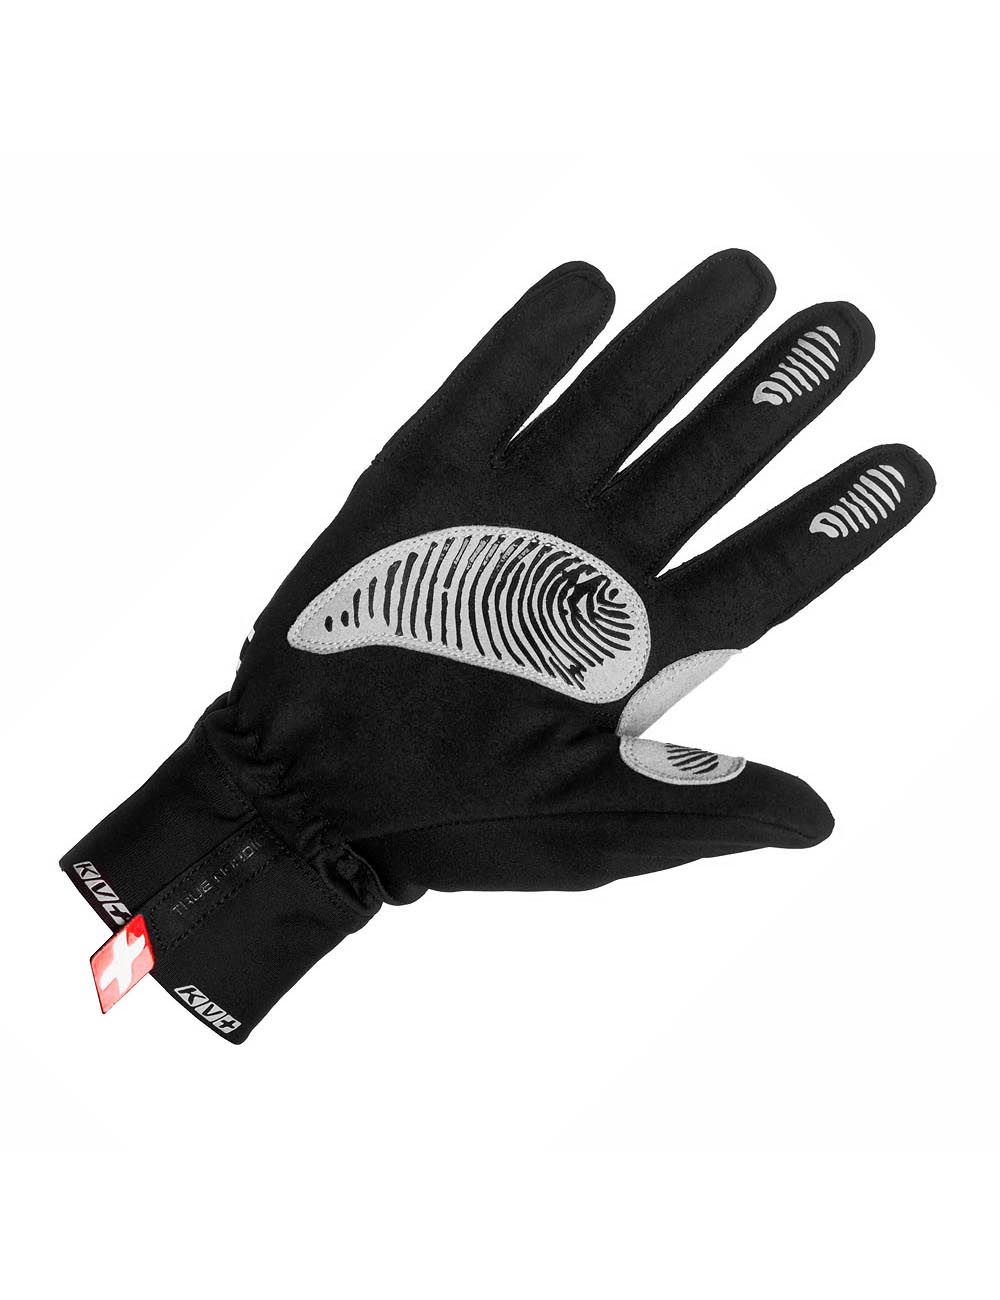 KV+ Лыжные перчатки RACE Black Артикул: 8G08.1